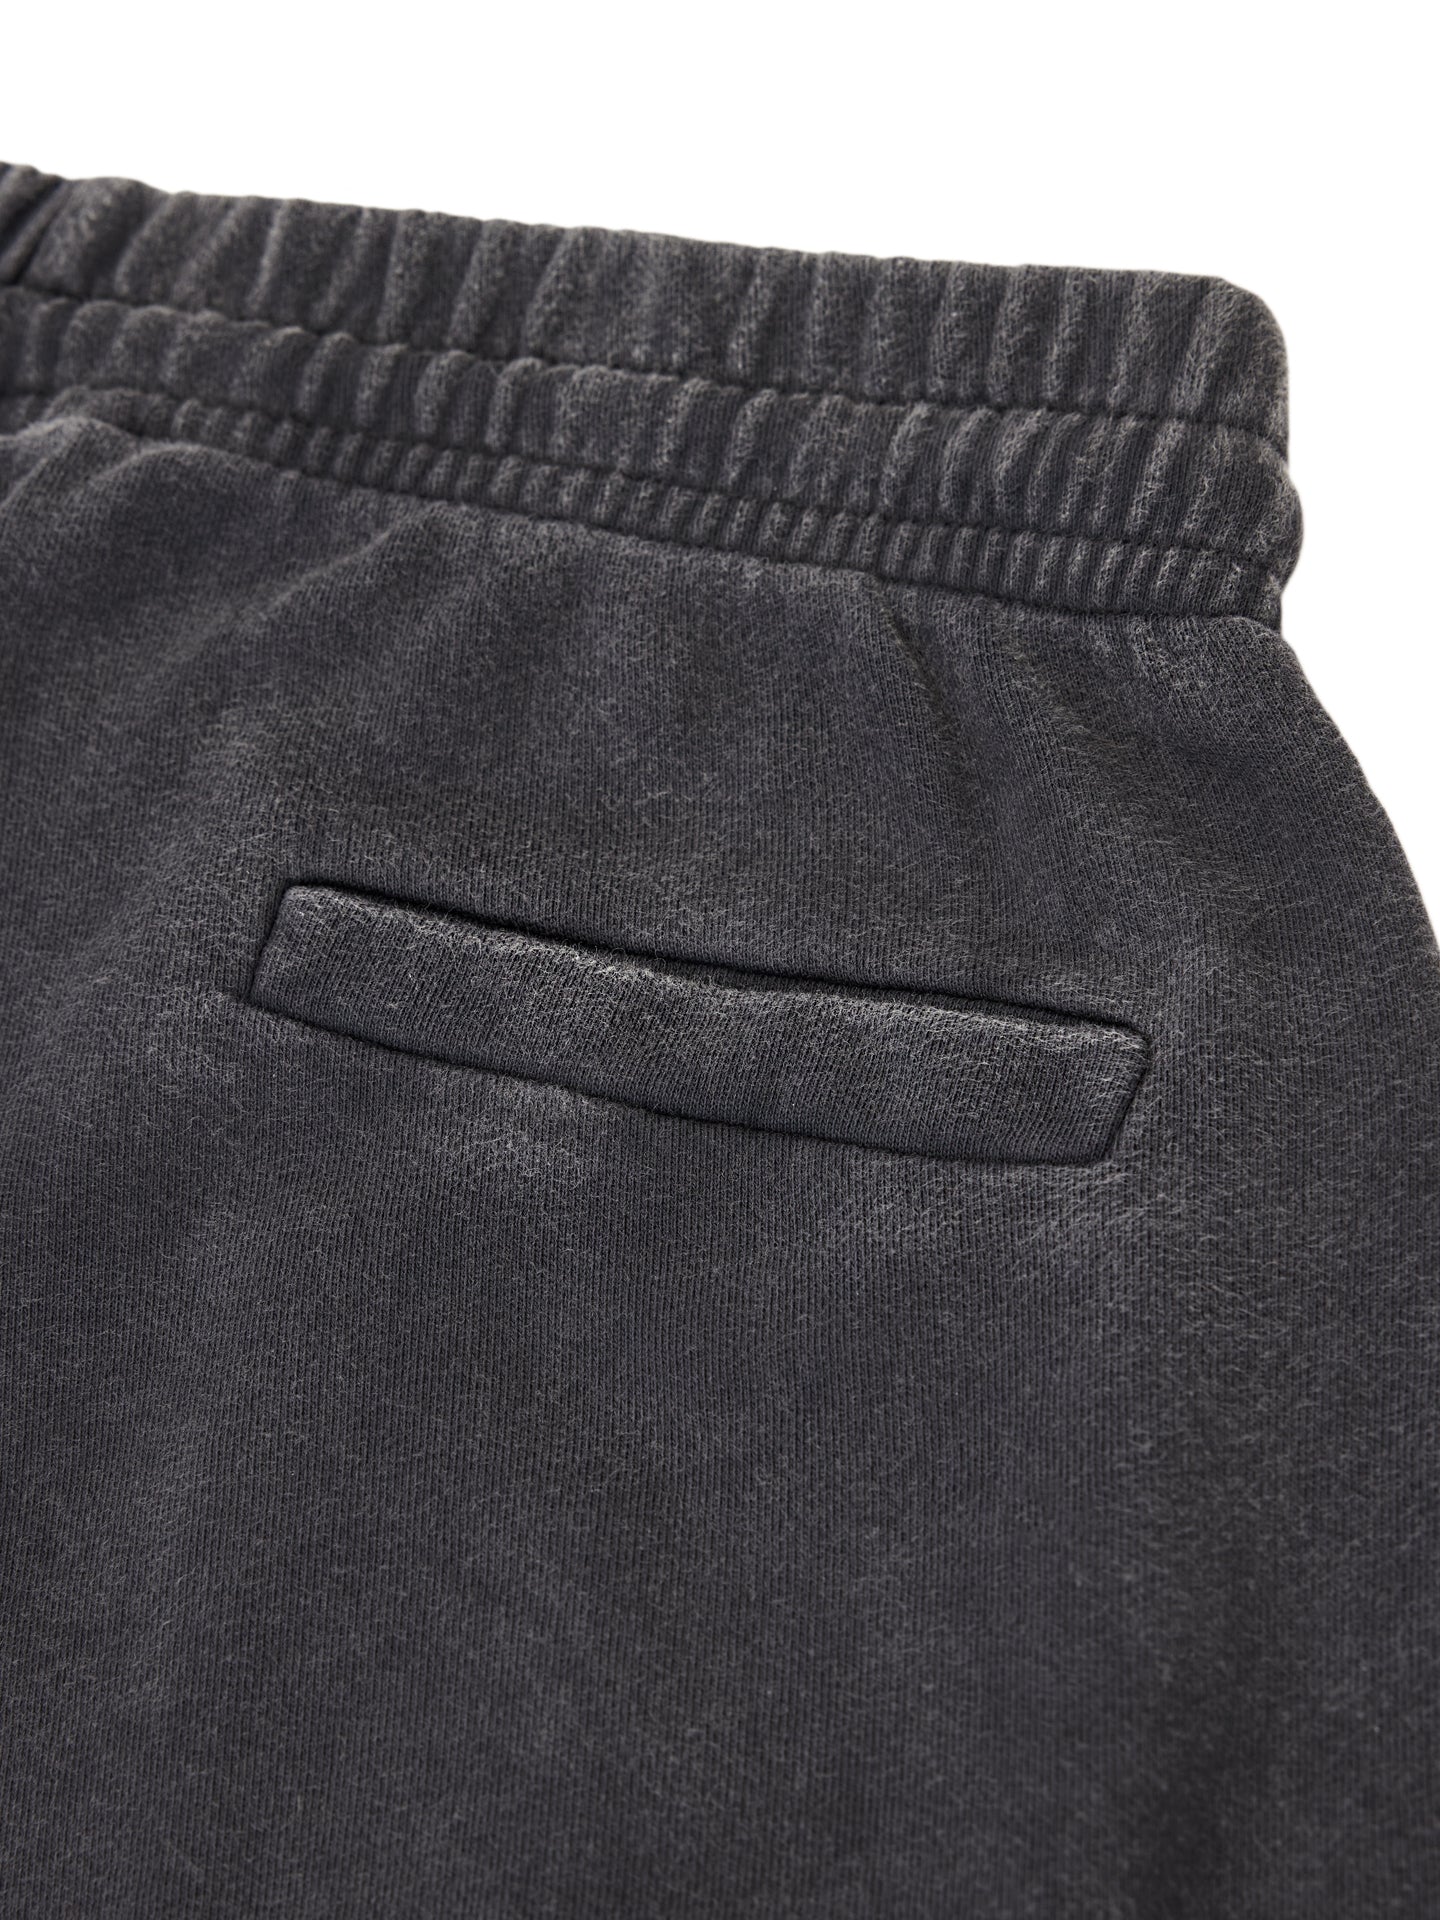 Sweatpants - vintage schwarz